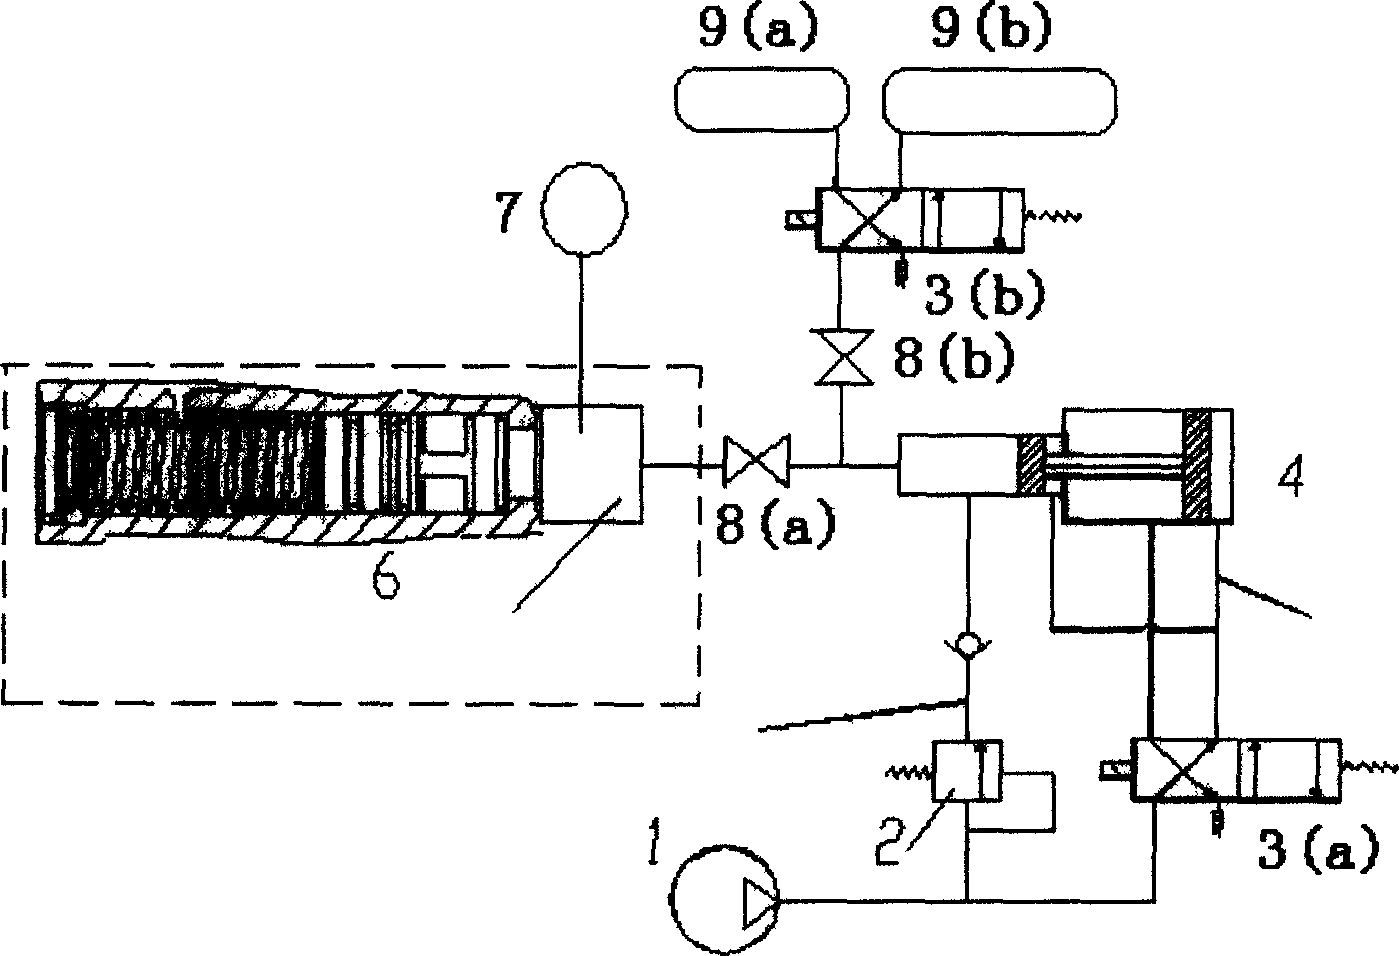 Dry testing method for pressure limiting valve opening pressure